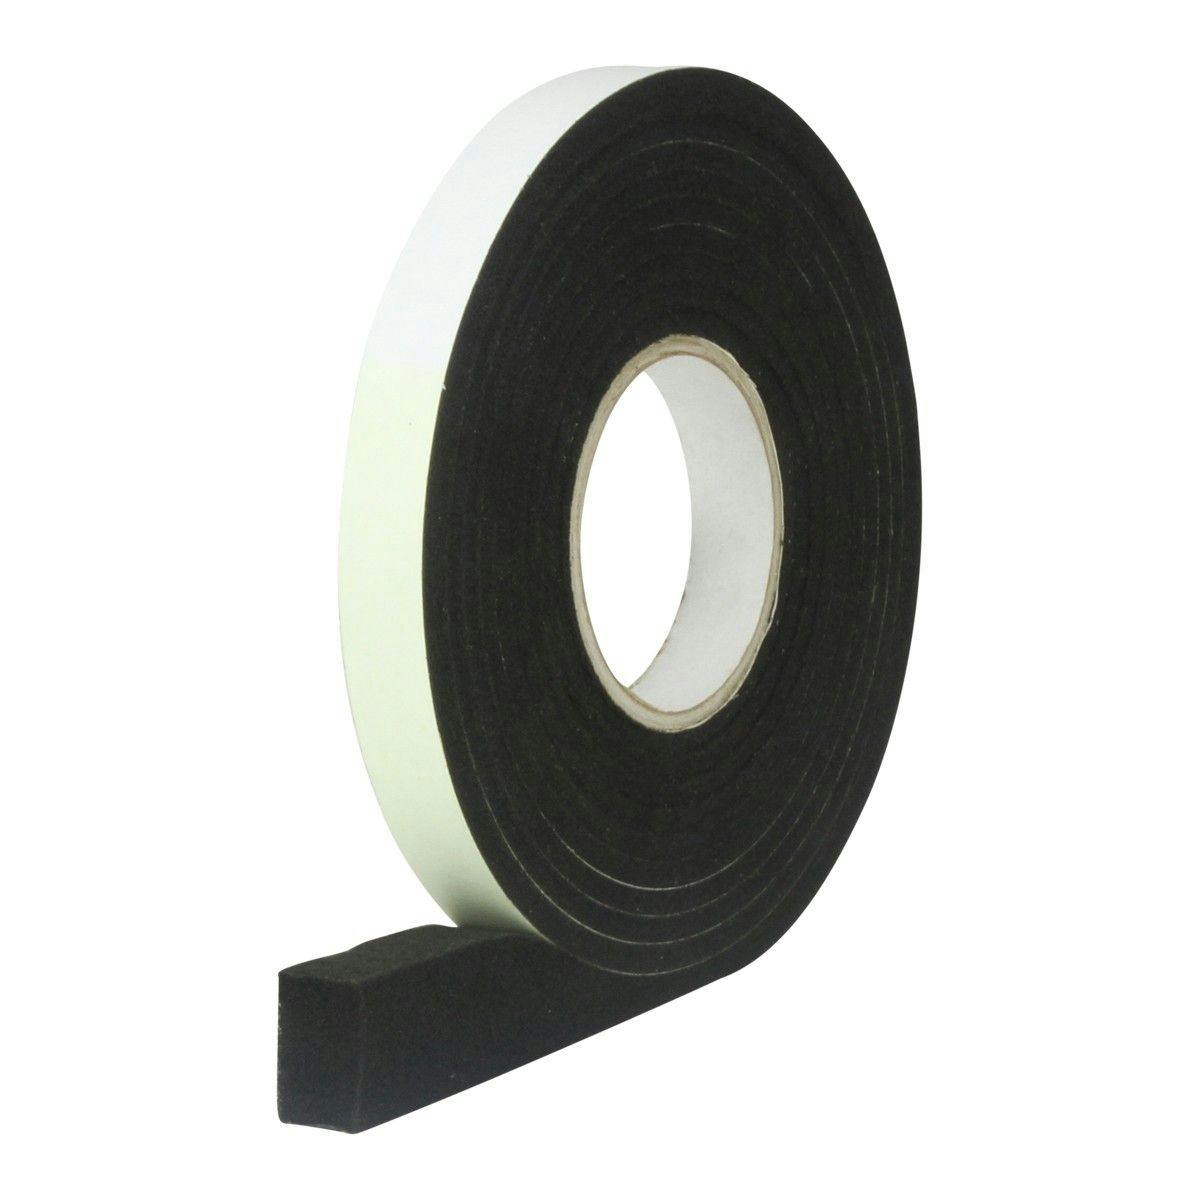 EKI 520 expanding foam tape self-adhesive black